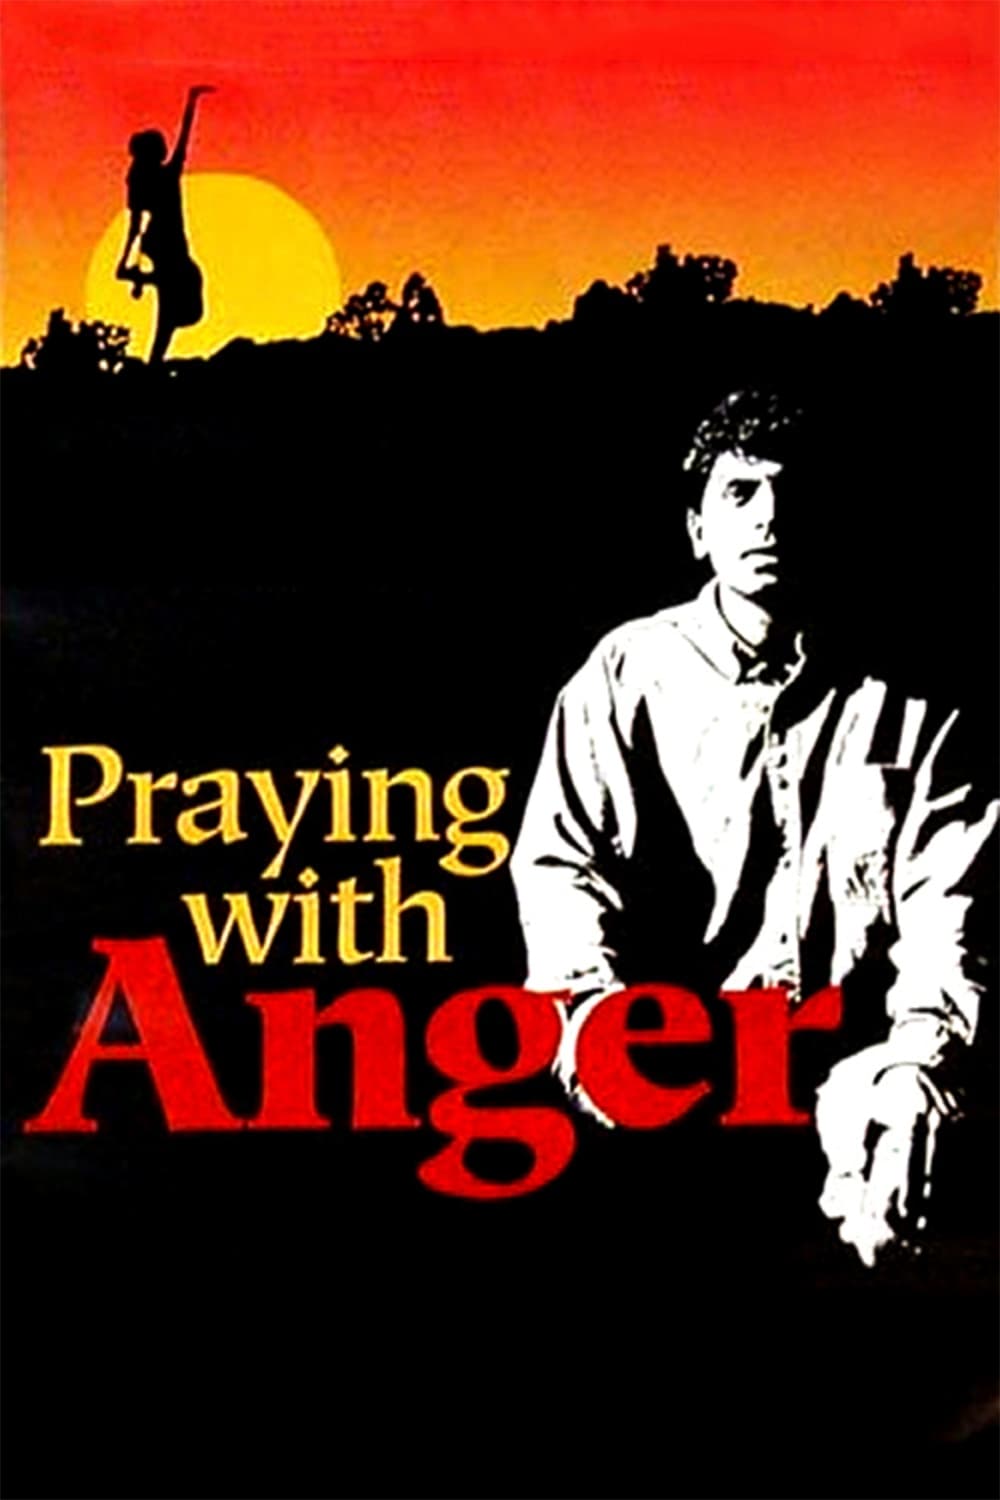 Praying with Anger film